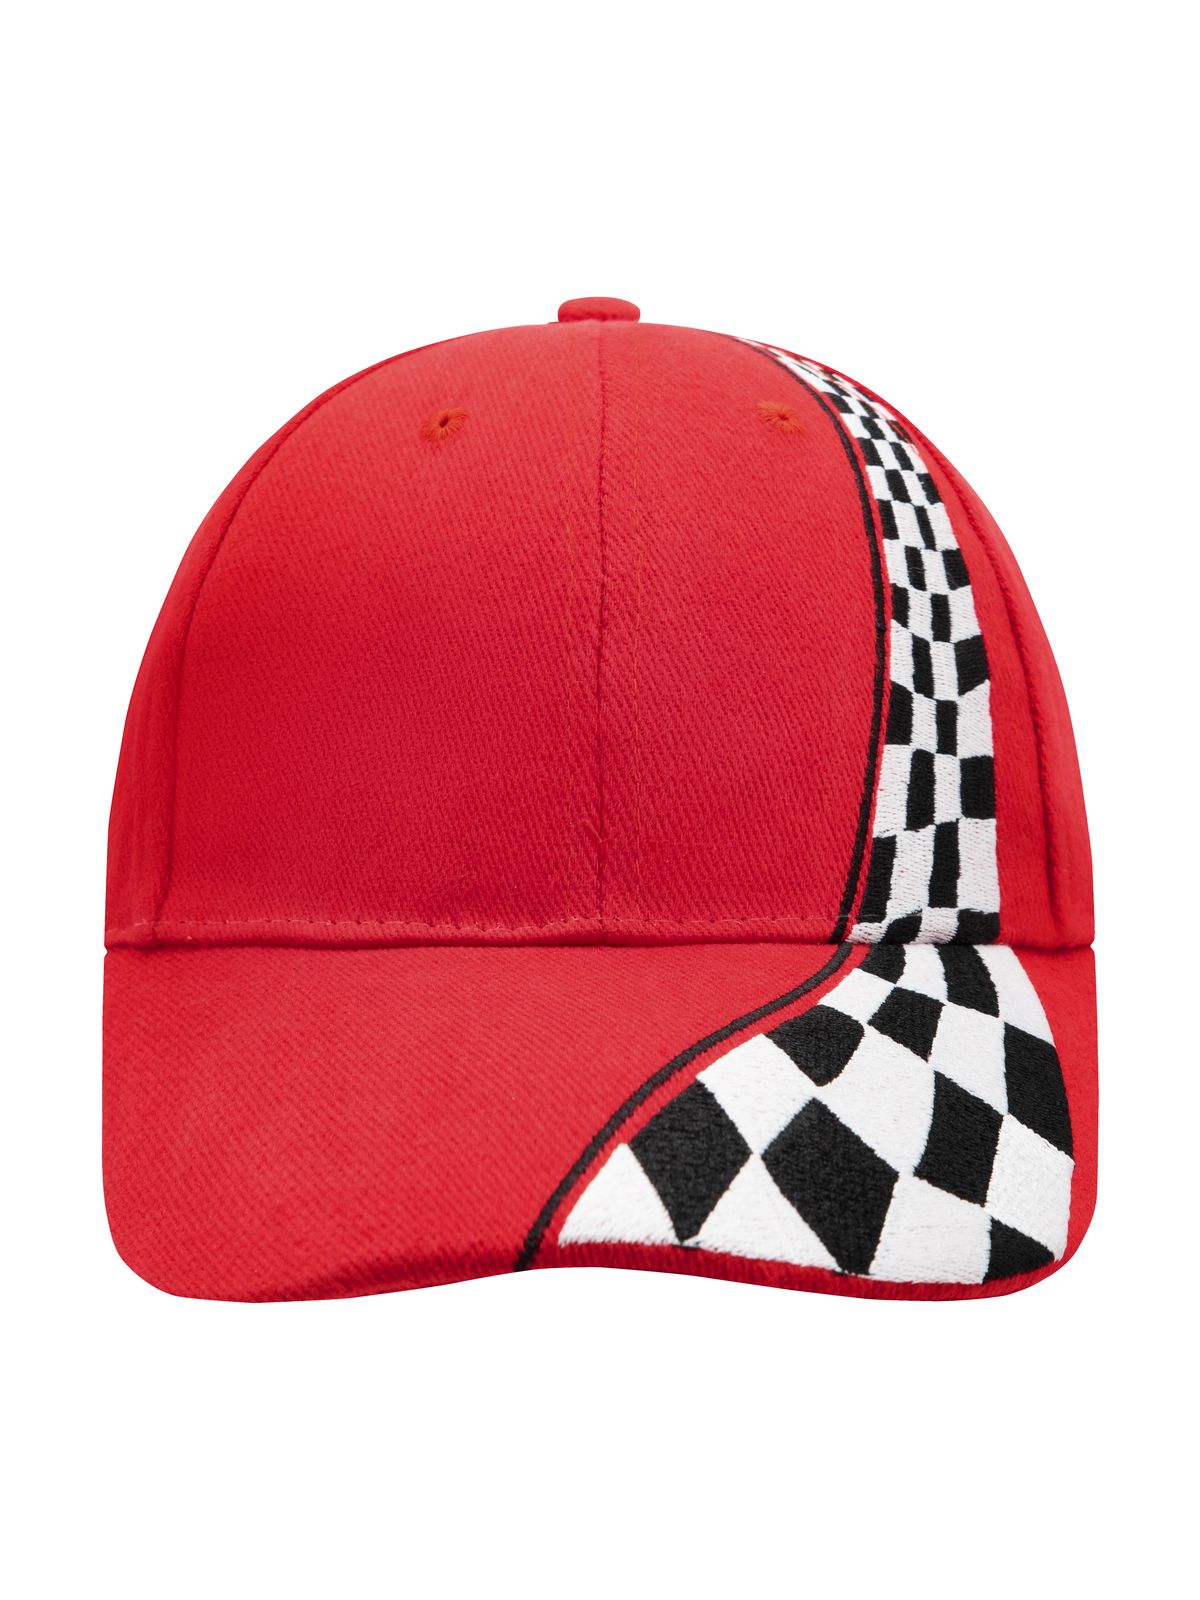 racing-cap-red.webp